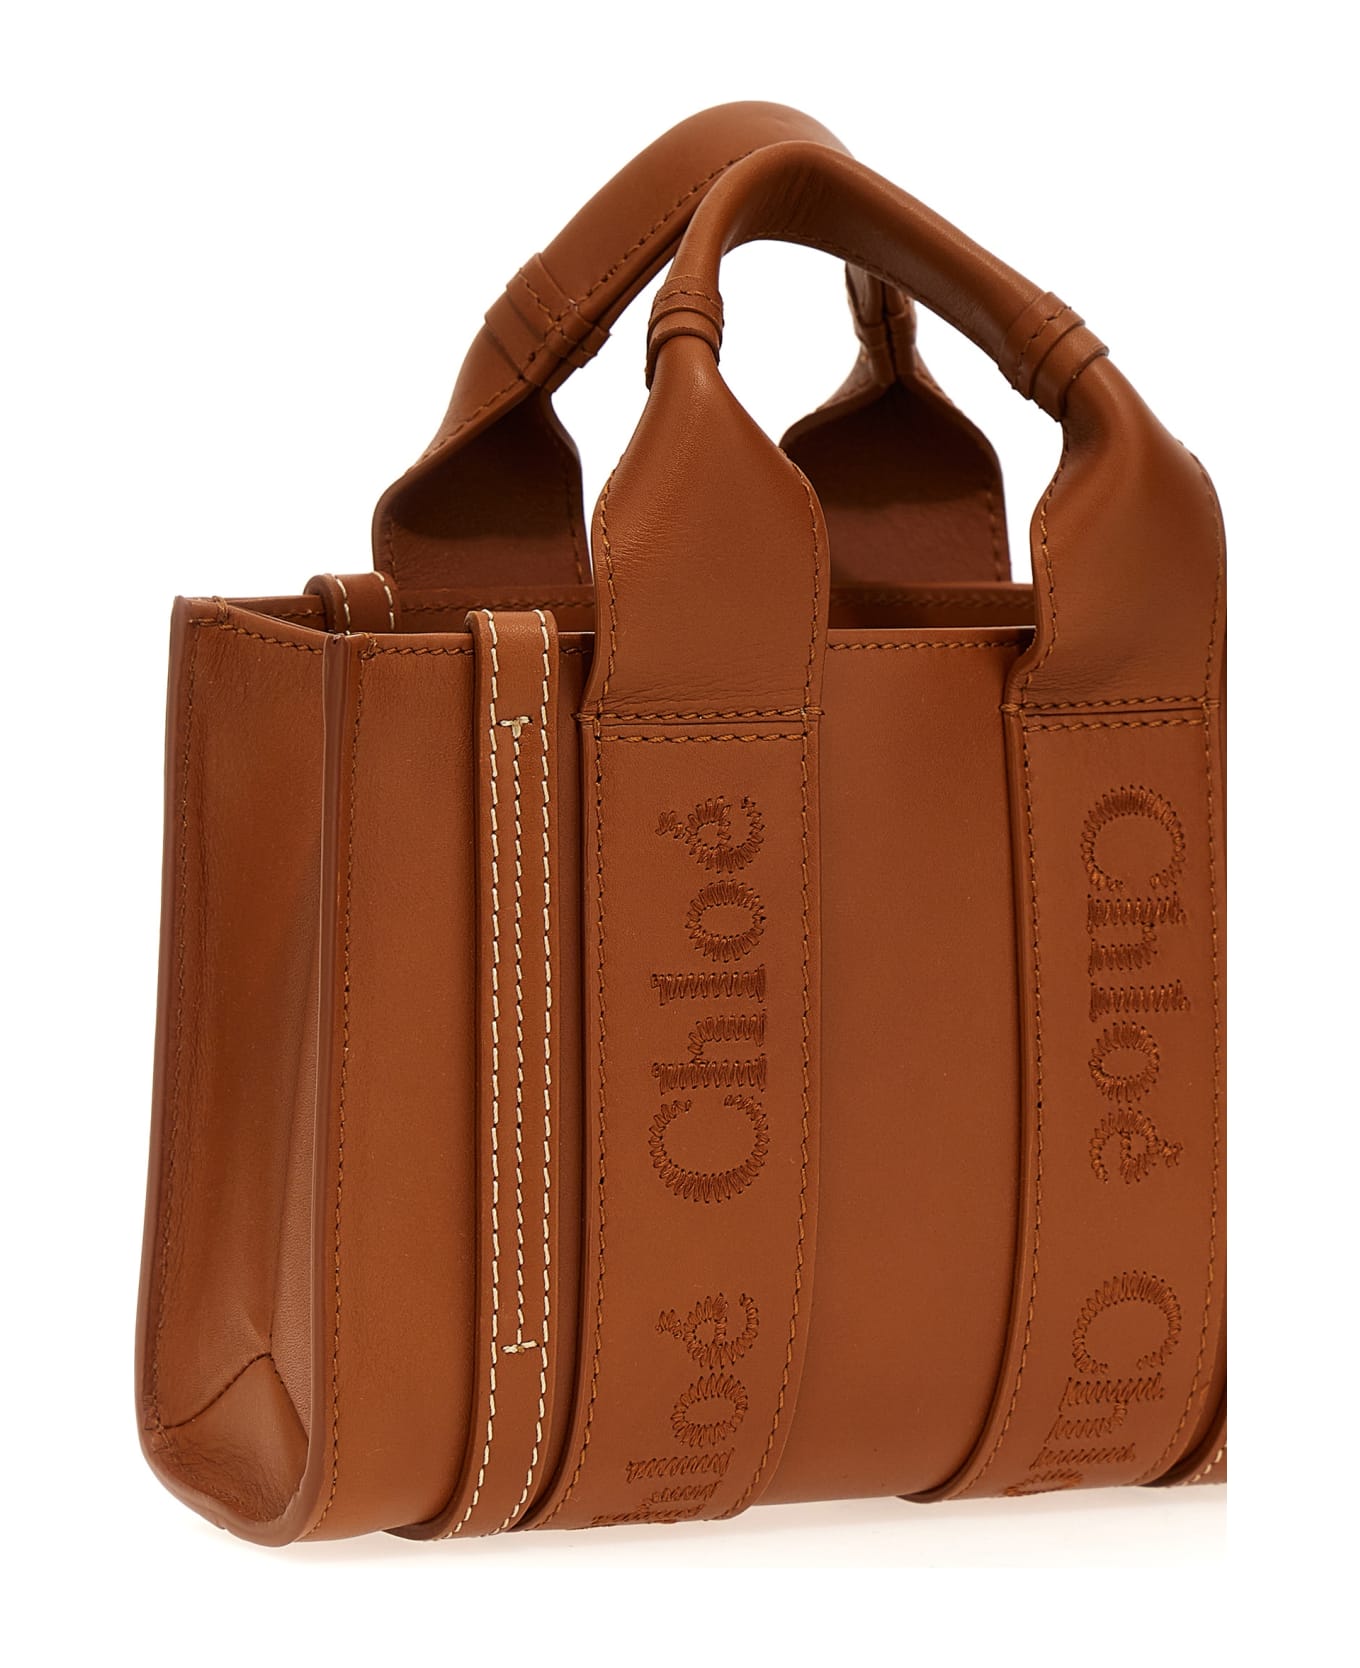 Chloé Woody Handbag - Caramel